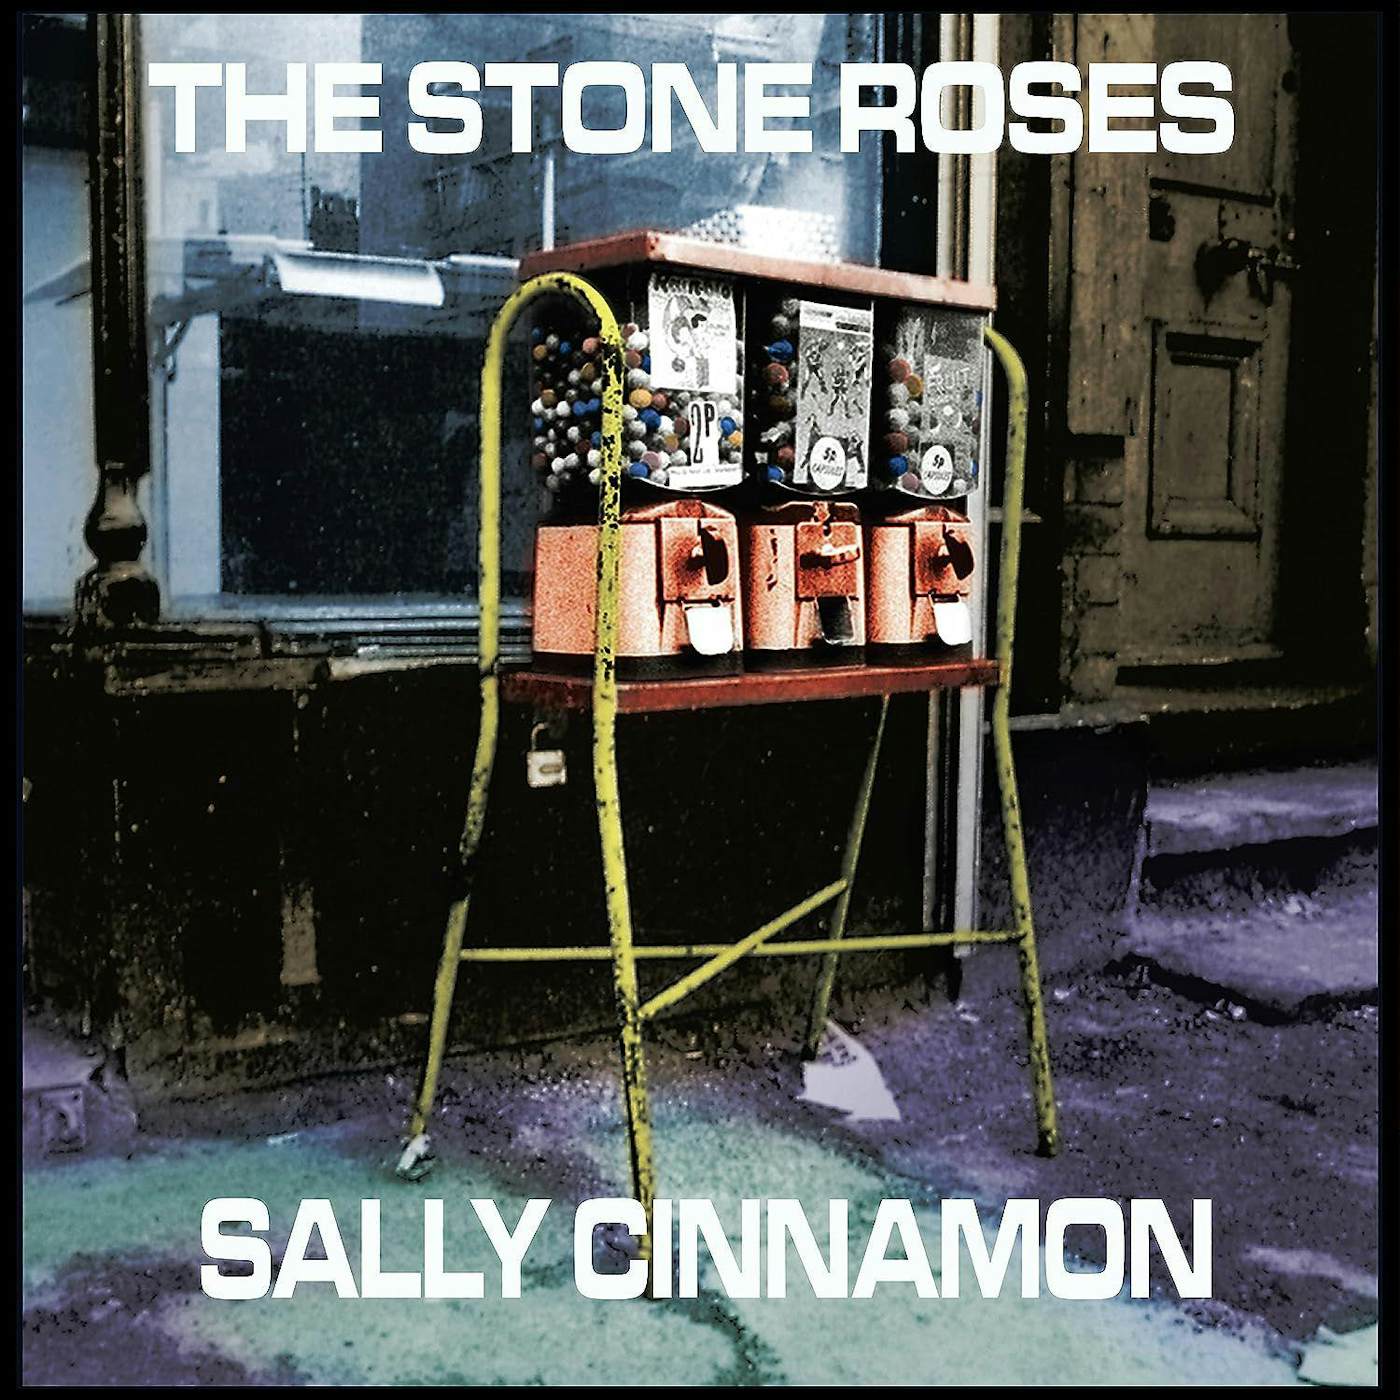 The Stone Roses Sally Cinnamon/Live Vinyl Record